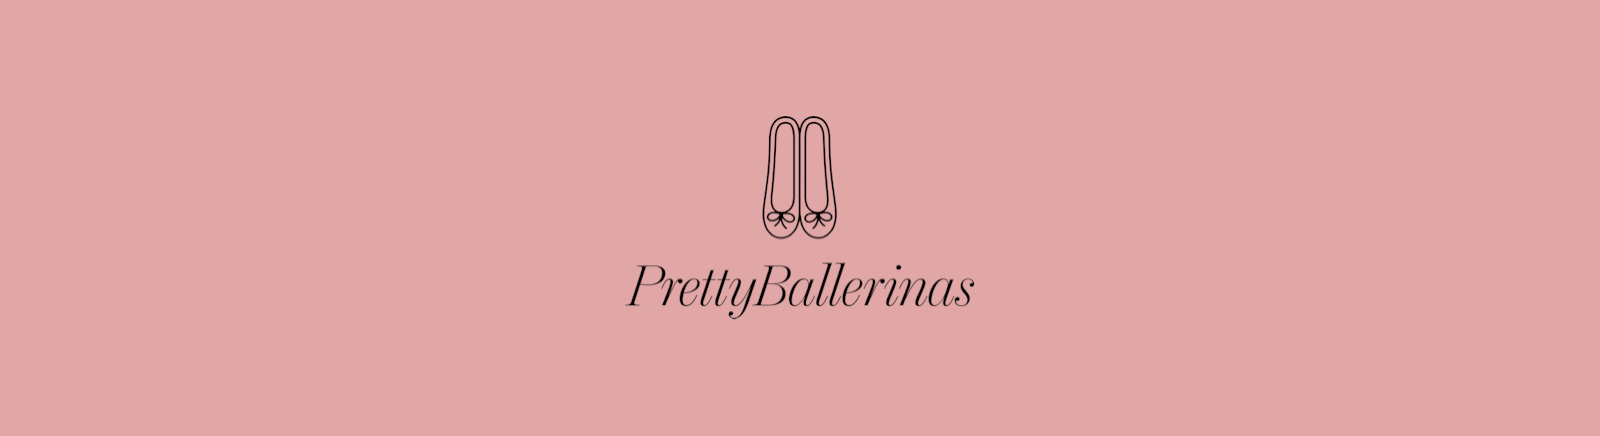 Pretty Ballerinas Damenschuhe online bestellen im Juppen Shop